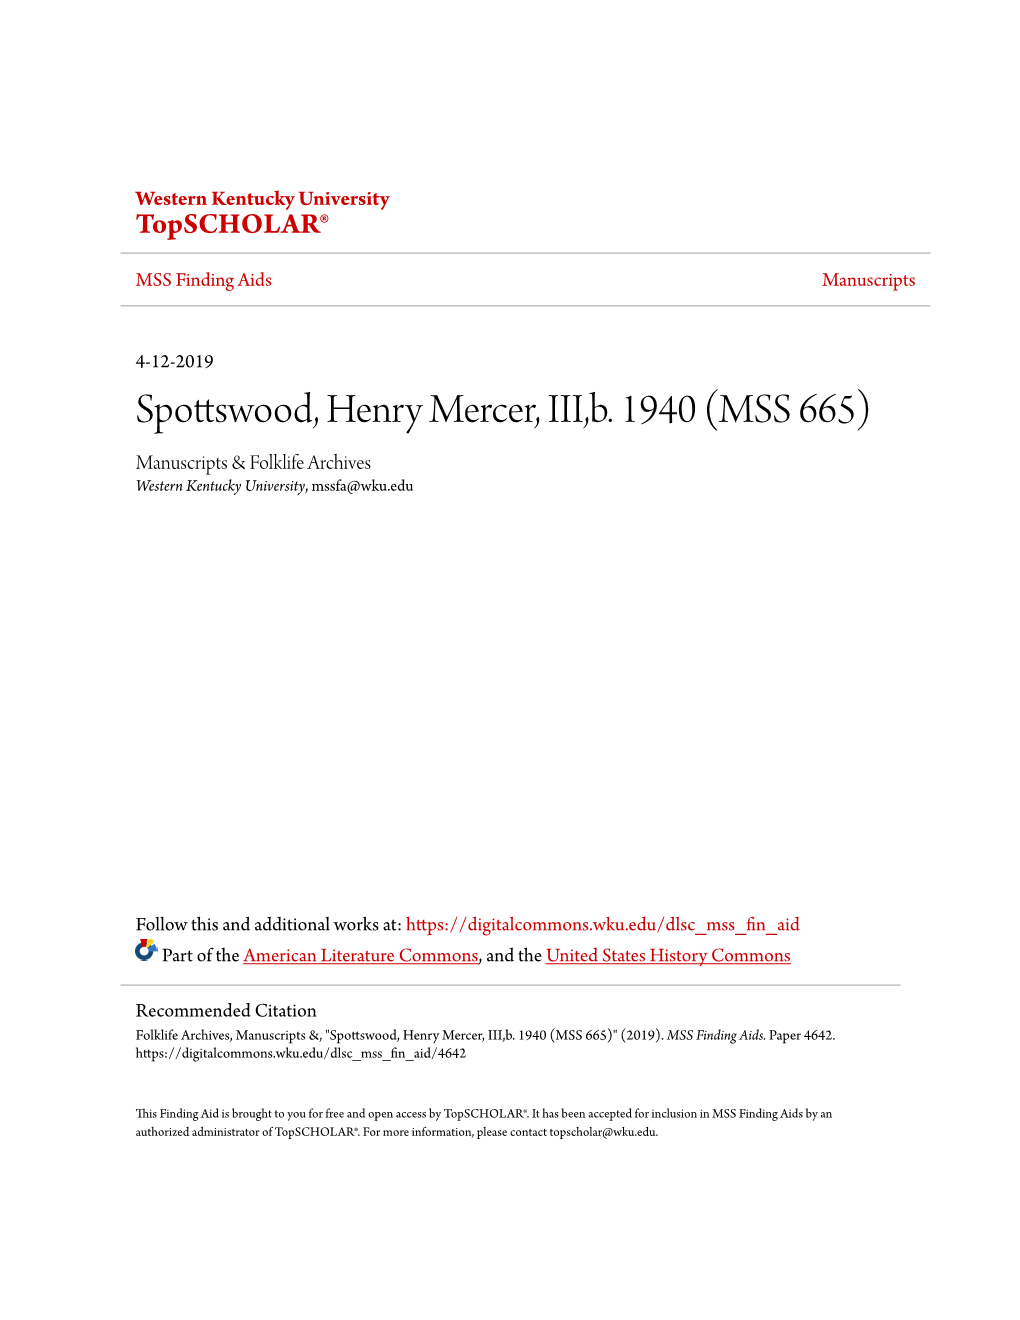 Spottswood, Henry Mercer, III,B. 1940 (MSS 665) Manuscripts & Folklife Archives Western Kentucky University, Mssfa@Wku.Edu